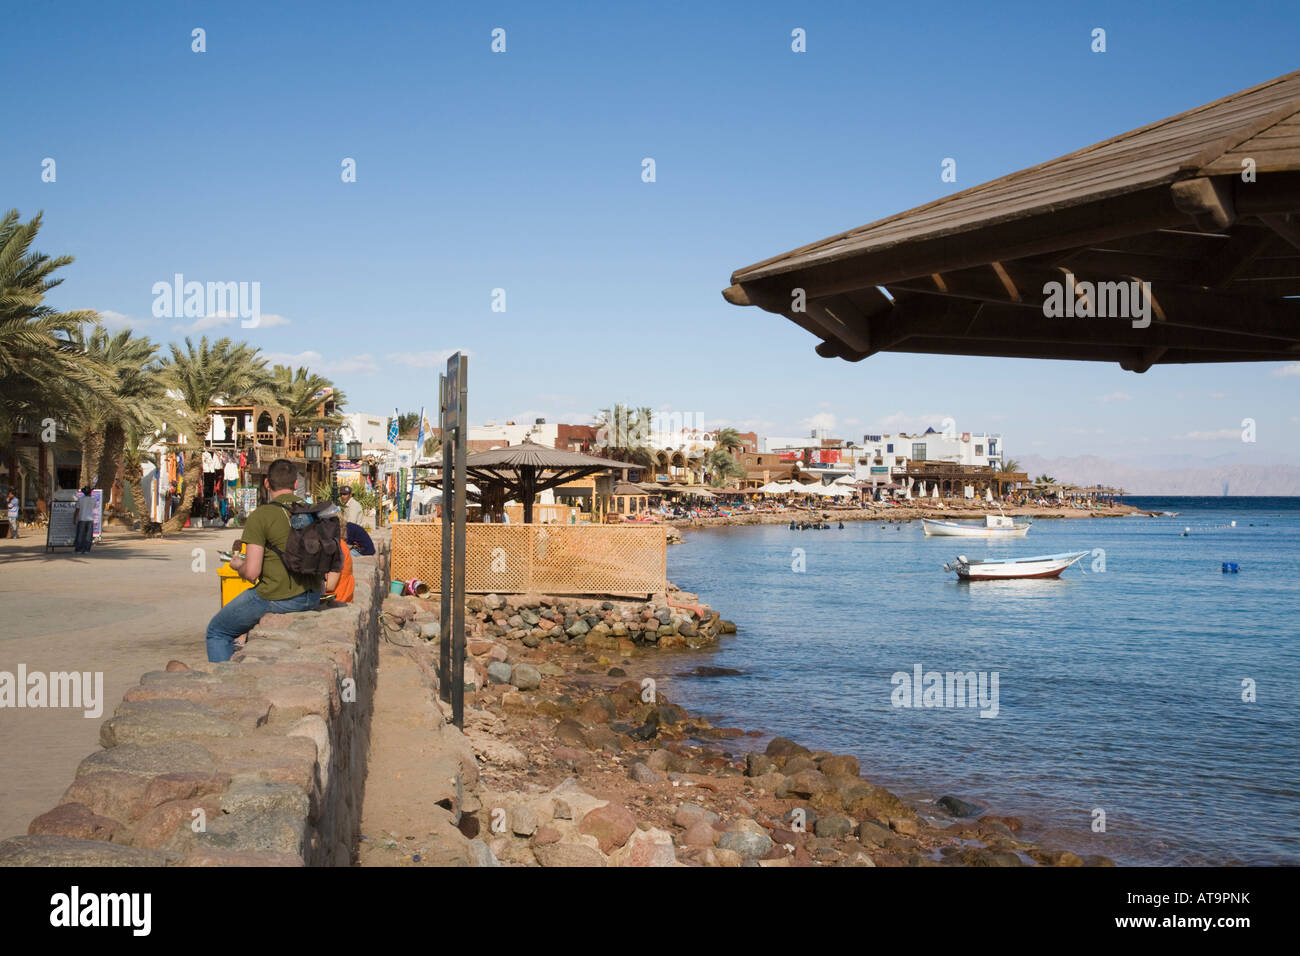 Dahab Sinai Peninsula Gulf of Aqaba Egypt Asia February Waterfront promenade and bay in seaside resort on Red Sea east coast Stock Photo